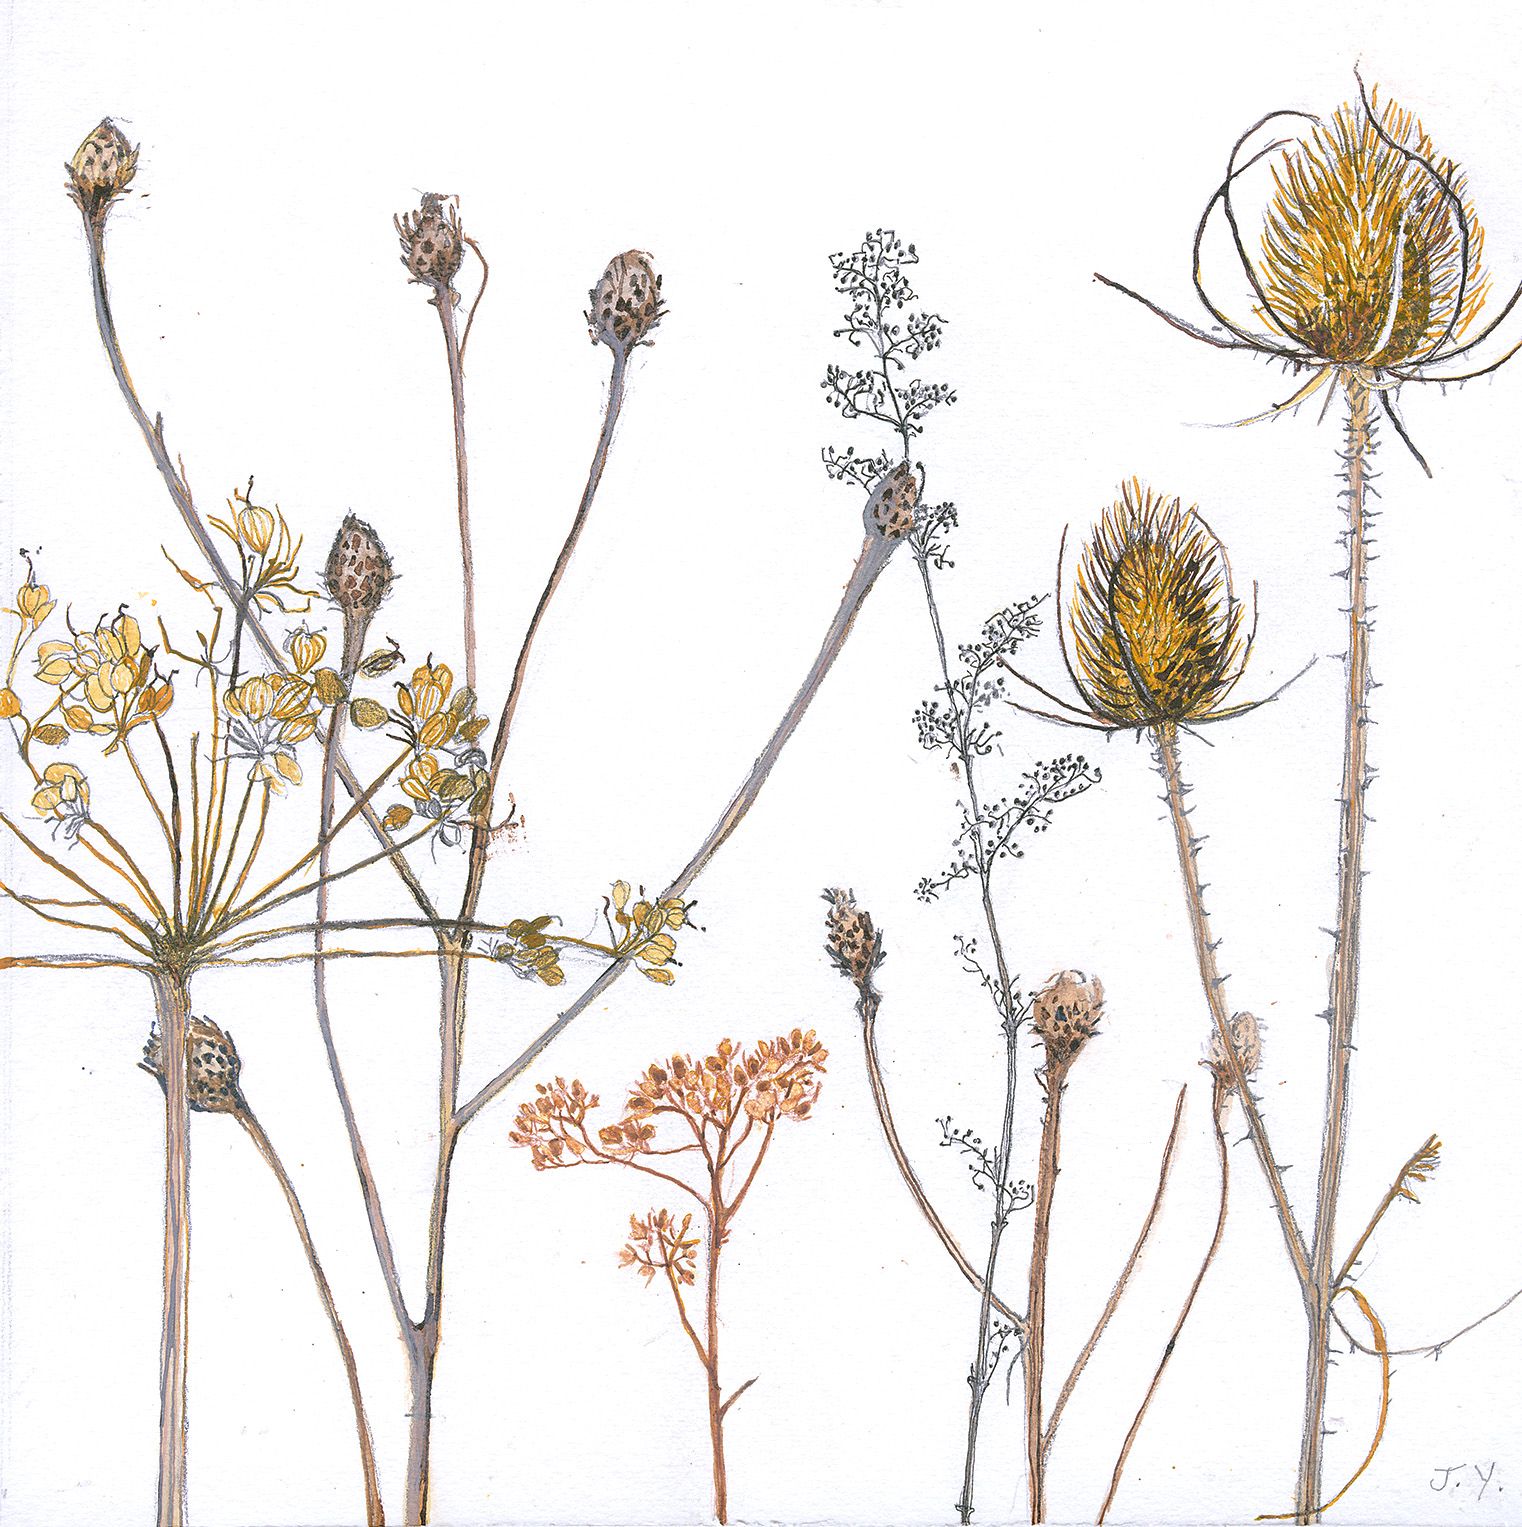 Winter Seedheads by Judith Yarrow